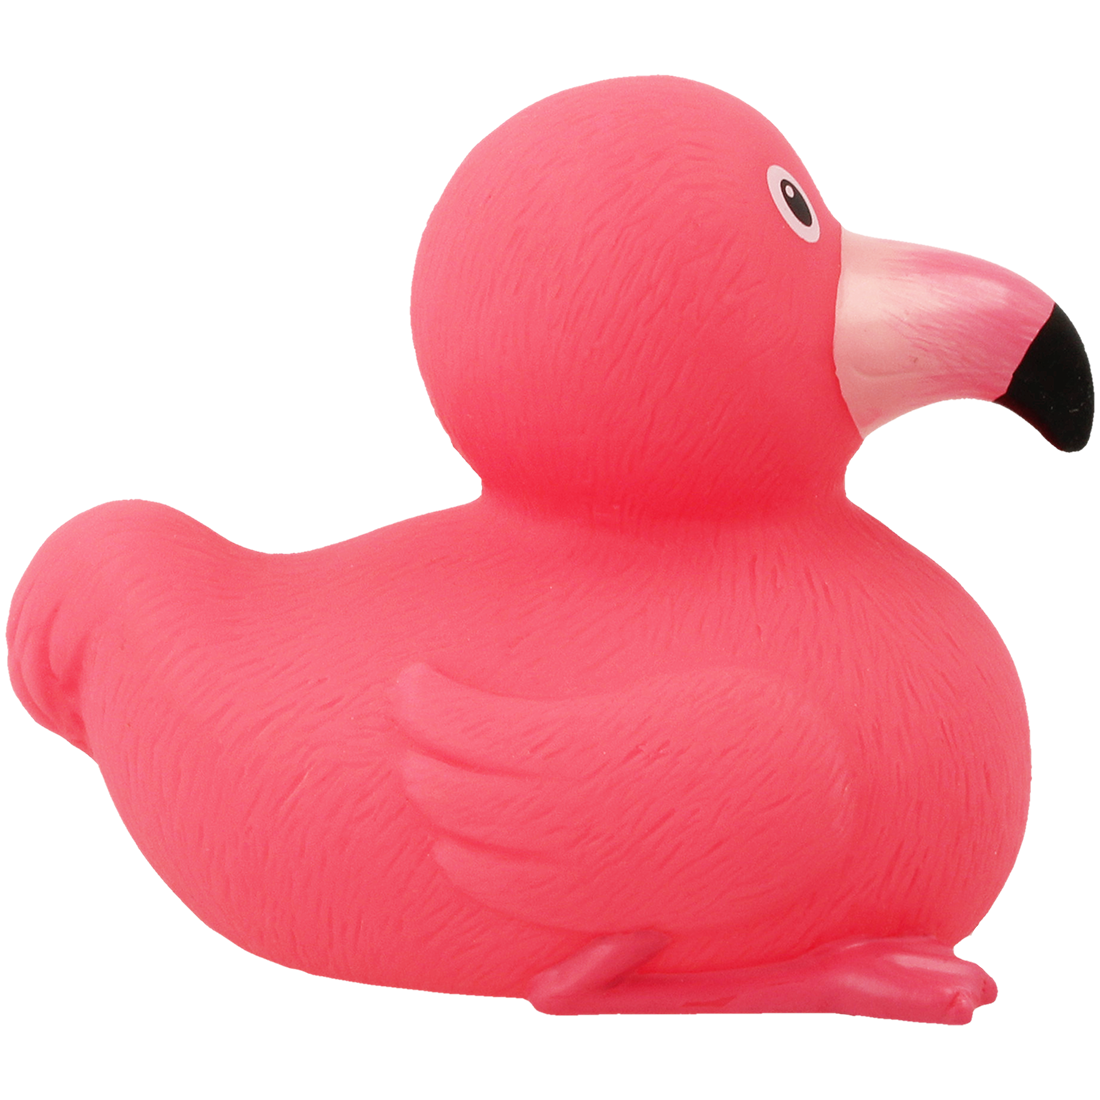 LILALU - SHARE HAPPINESS - Flamingo Quietscheente - design by LILALU